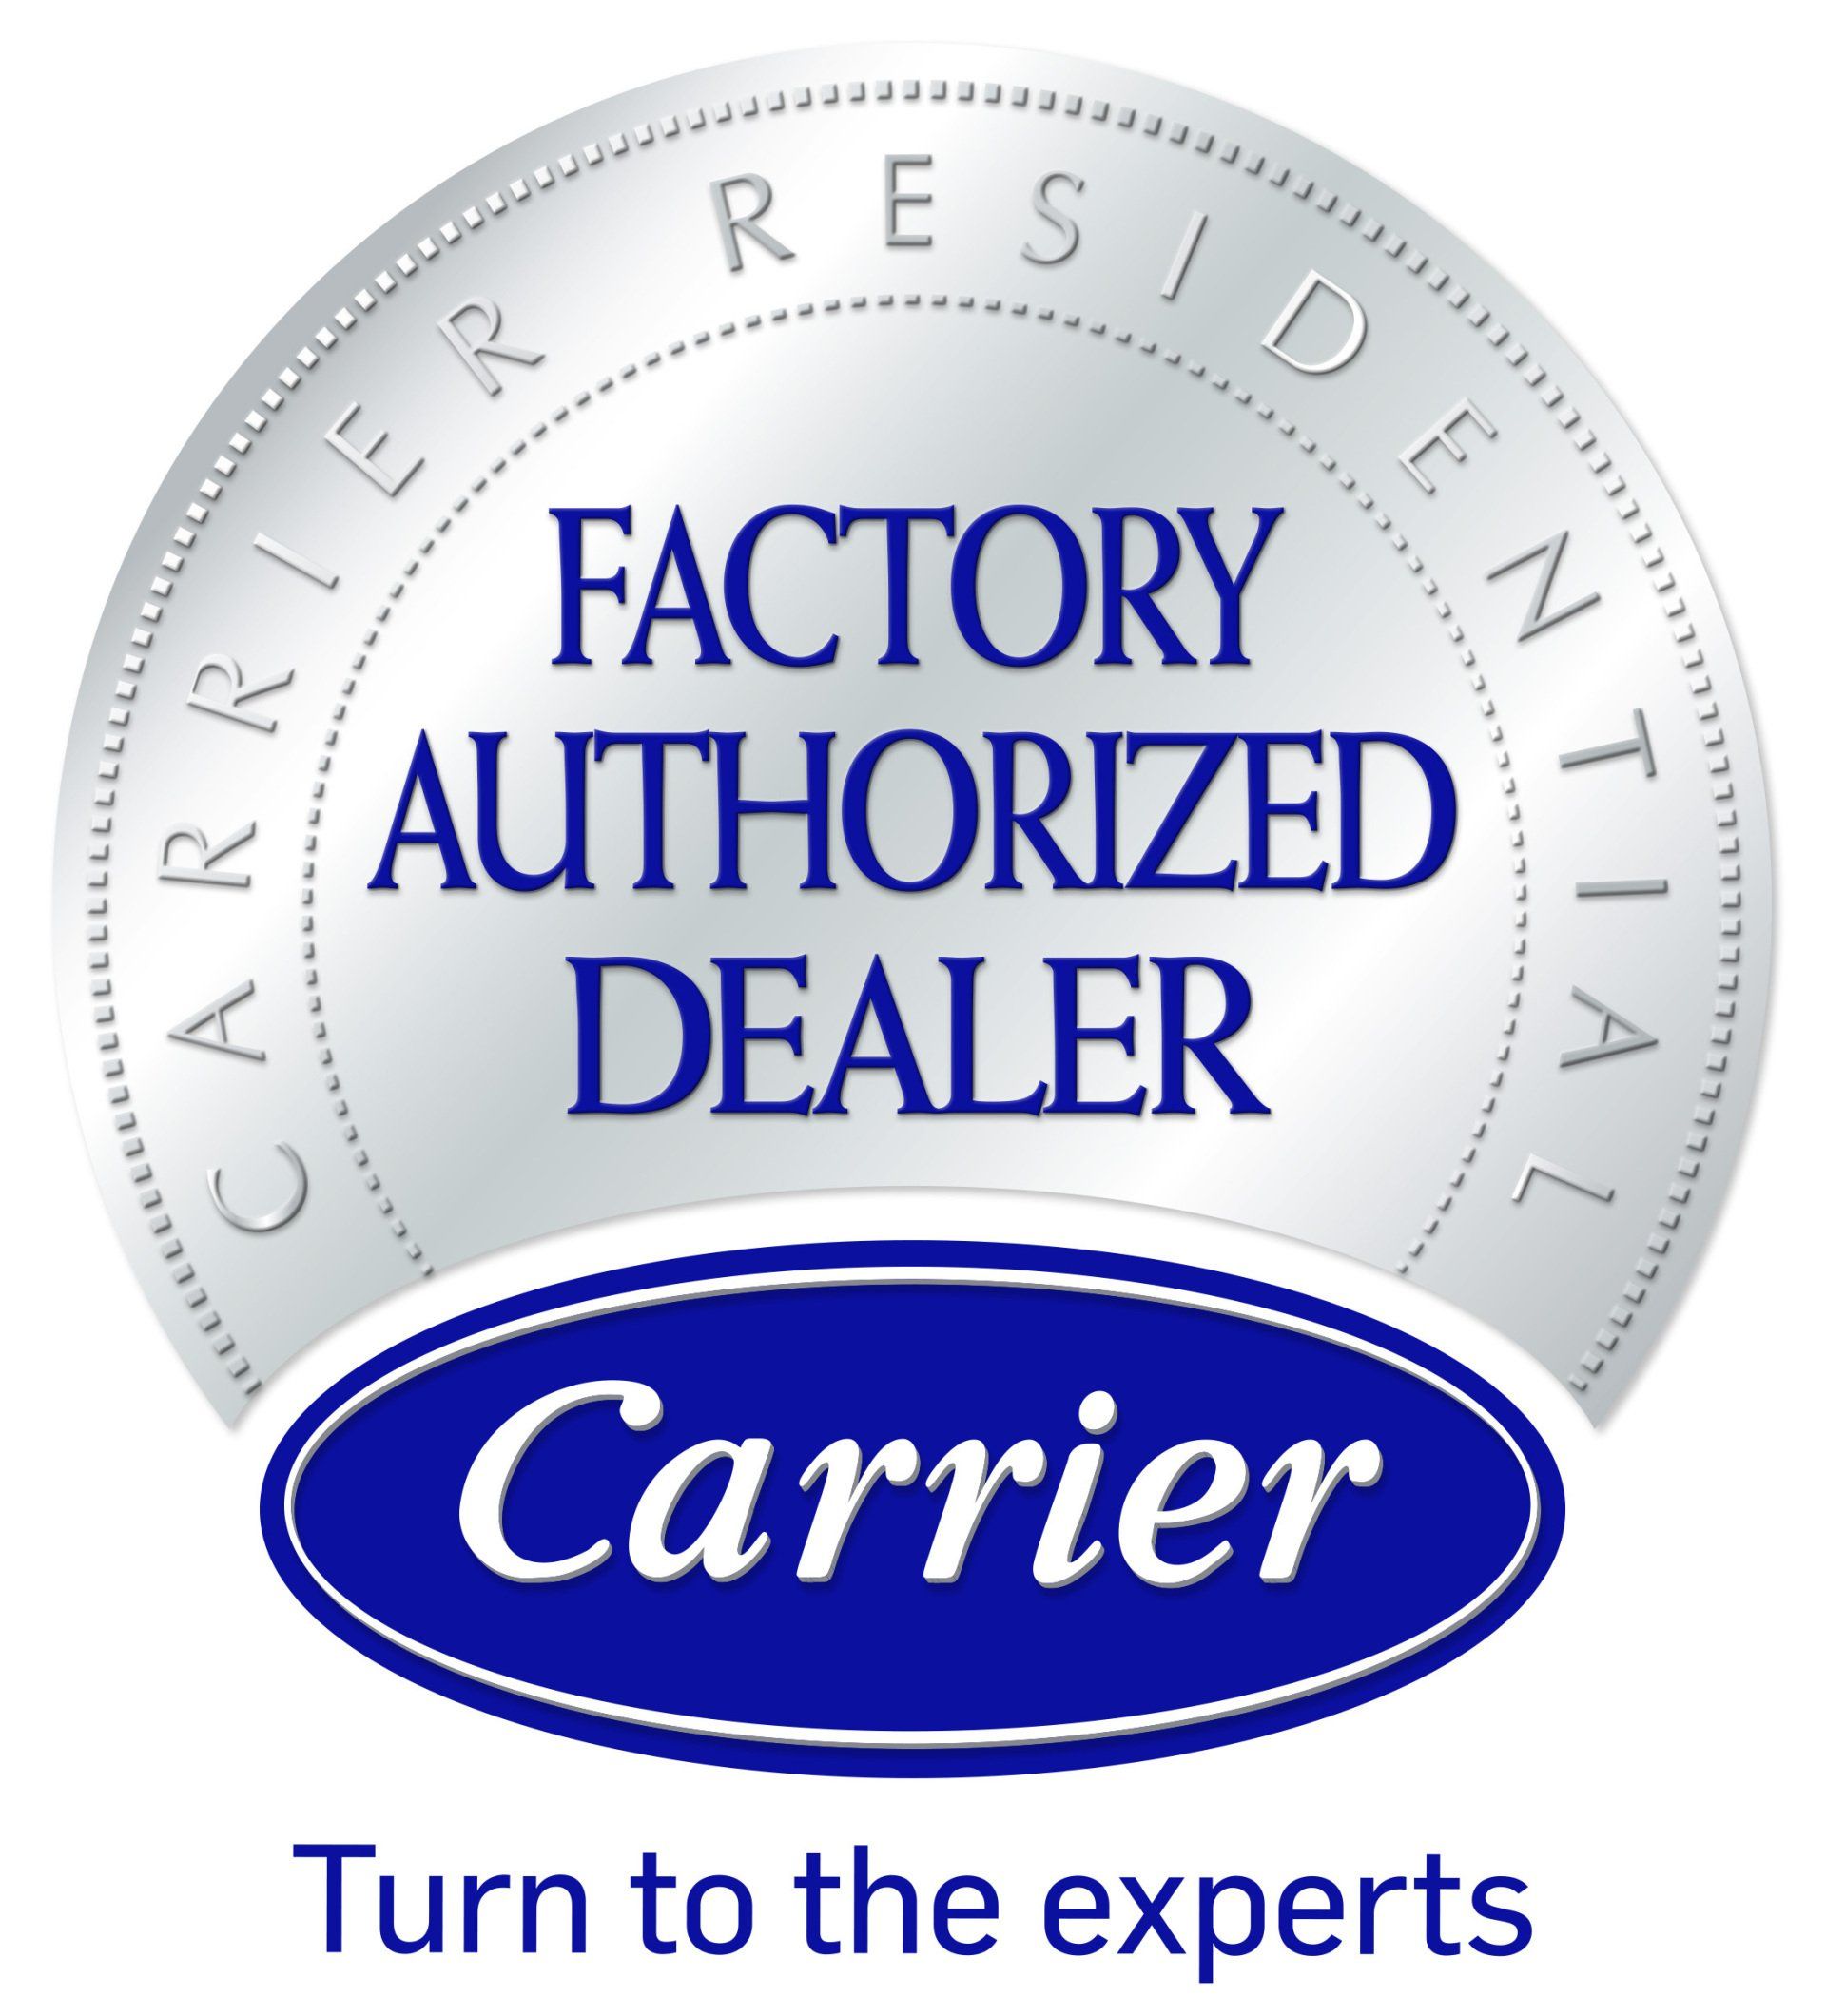 Carrier product registration